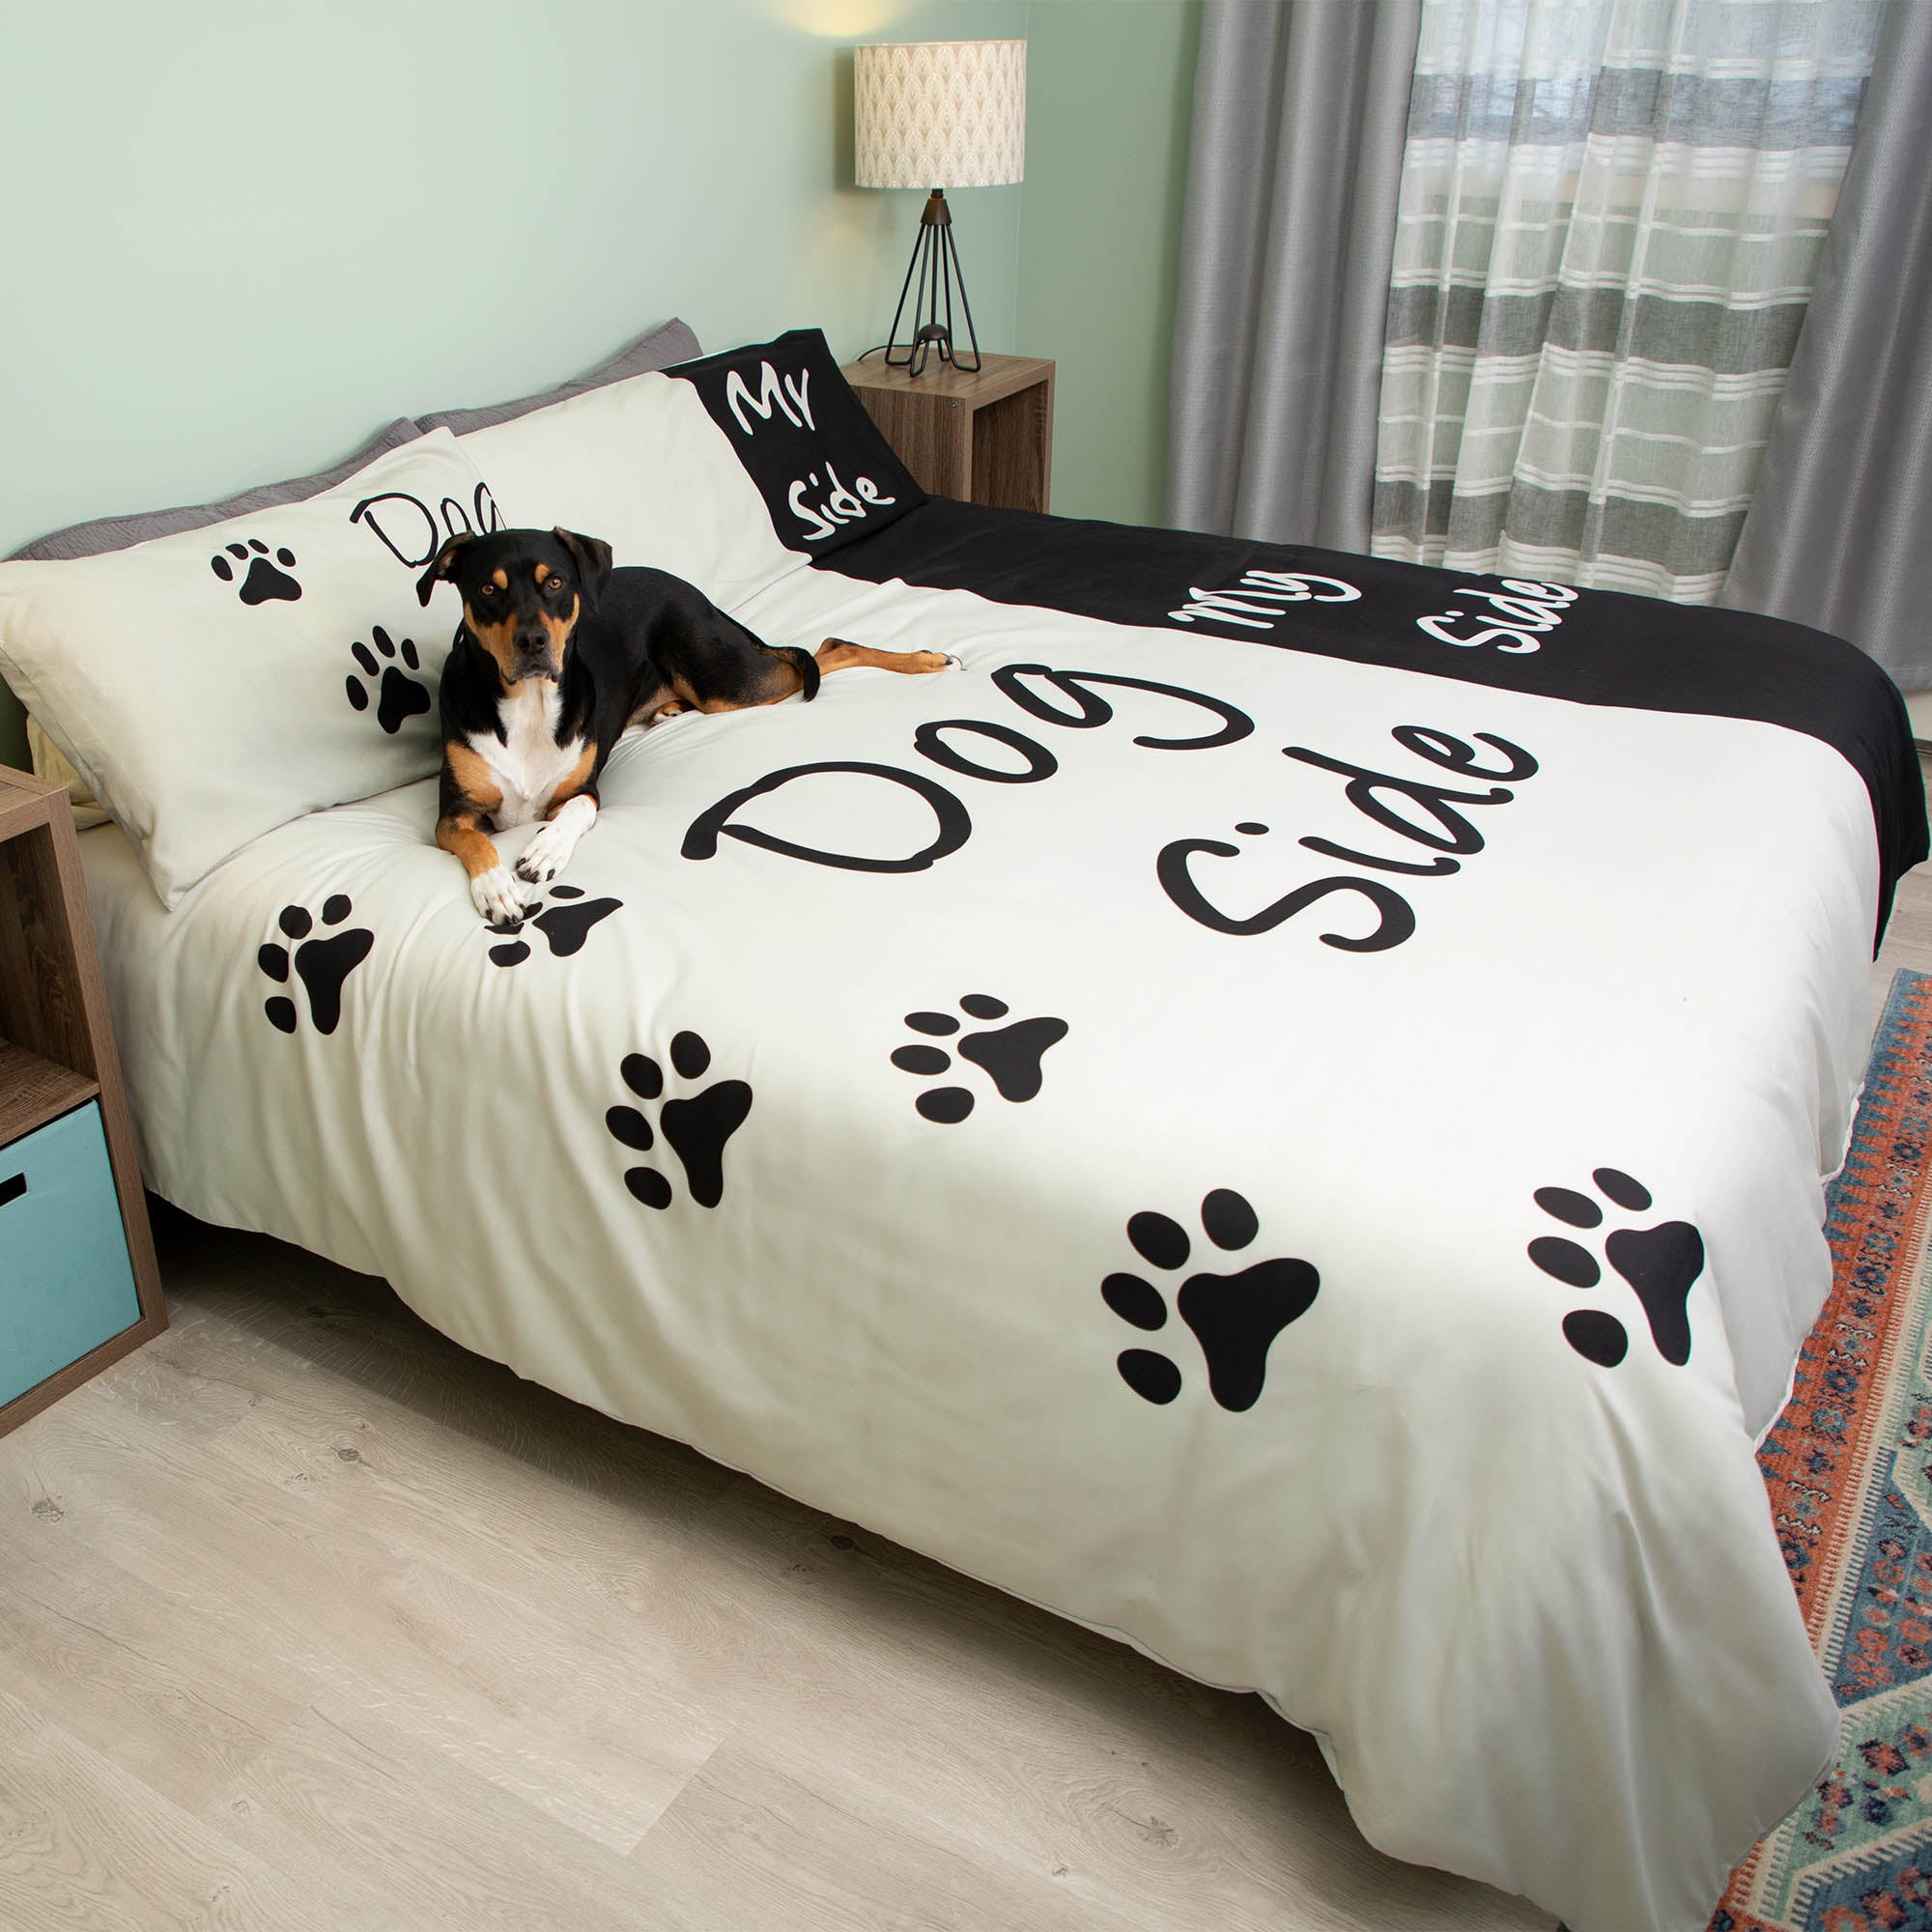 Dog Side, My Side - Duvet Cover & Pillow Case Set - King - Cat